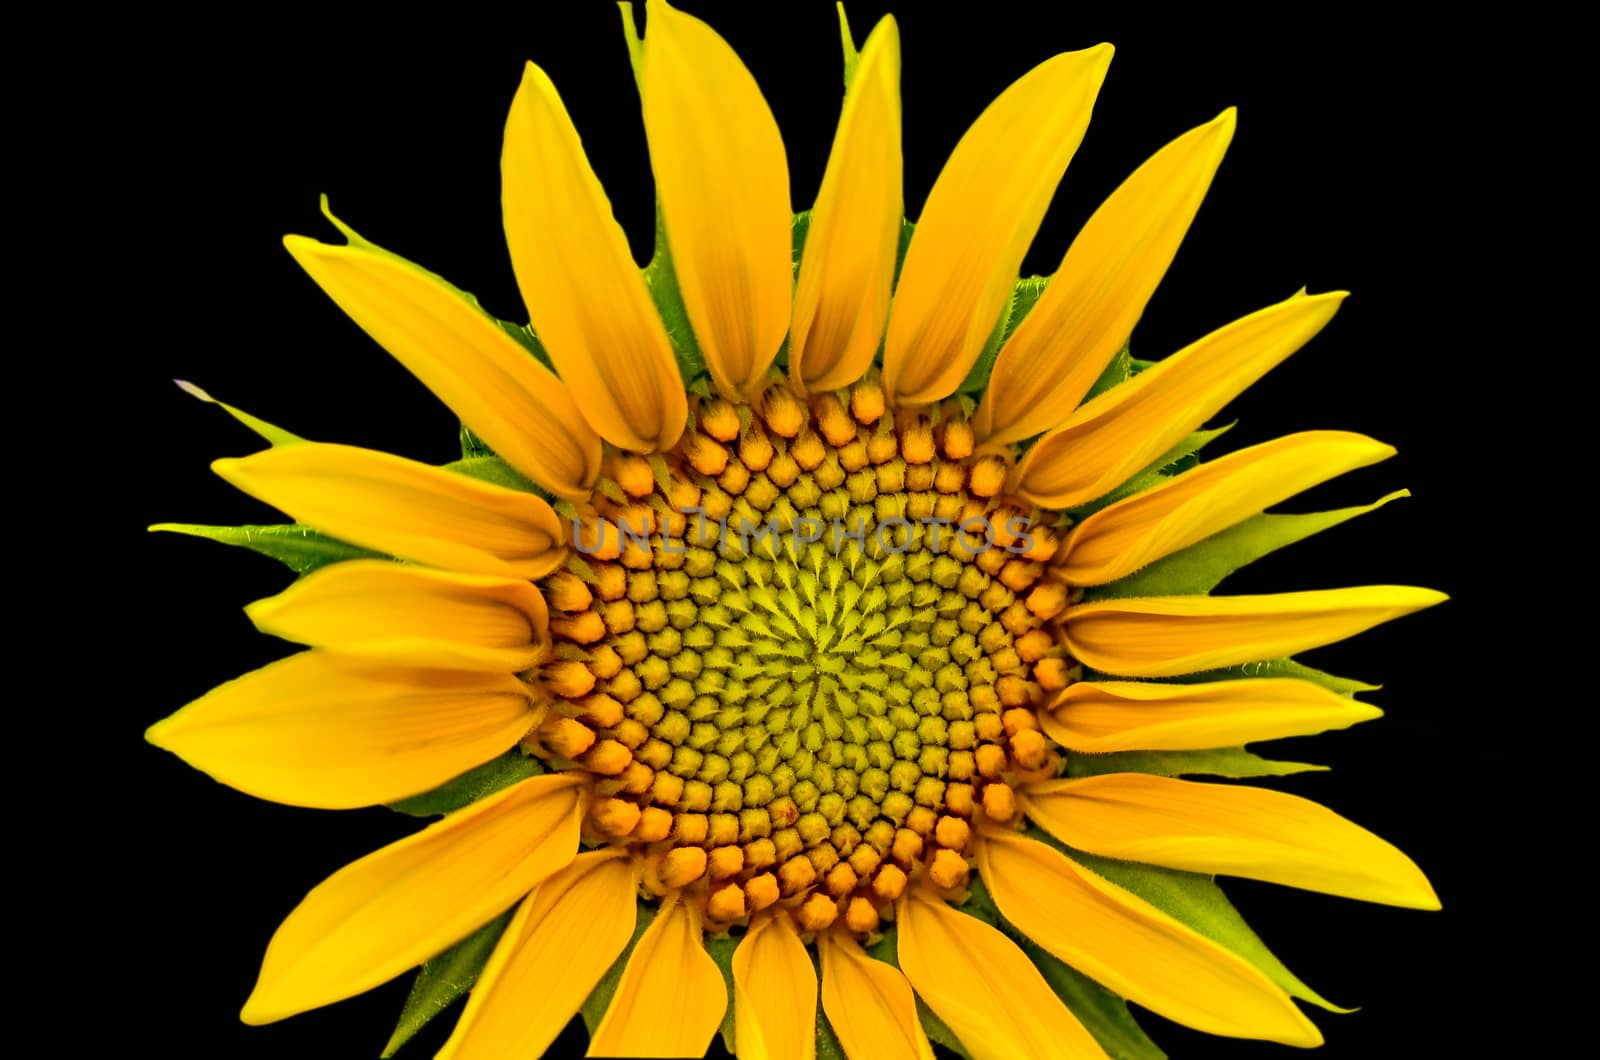 sunflower closeup on black background